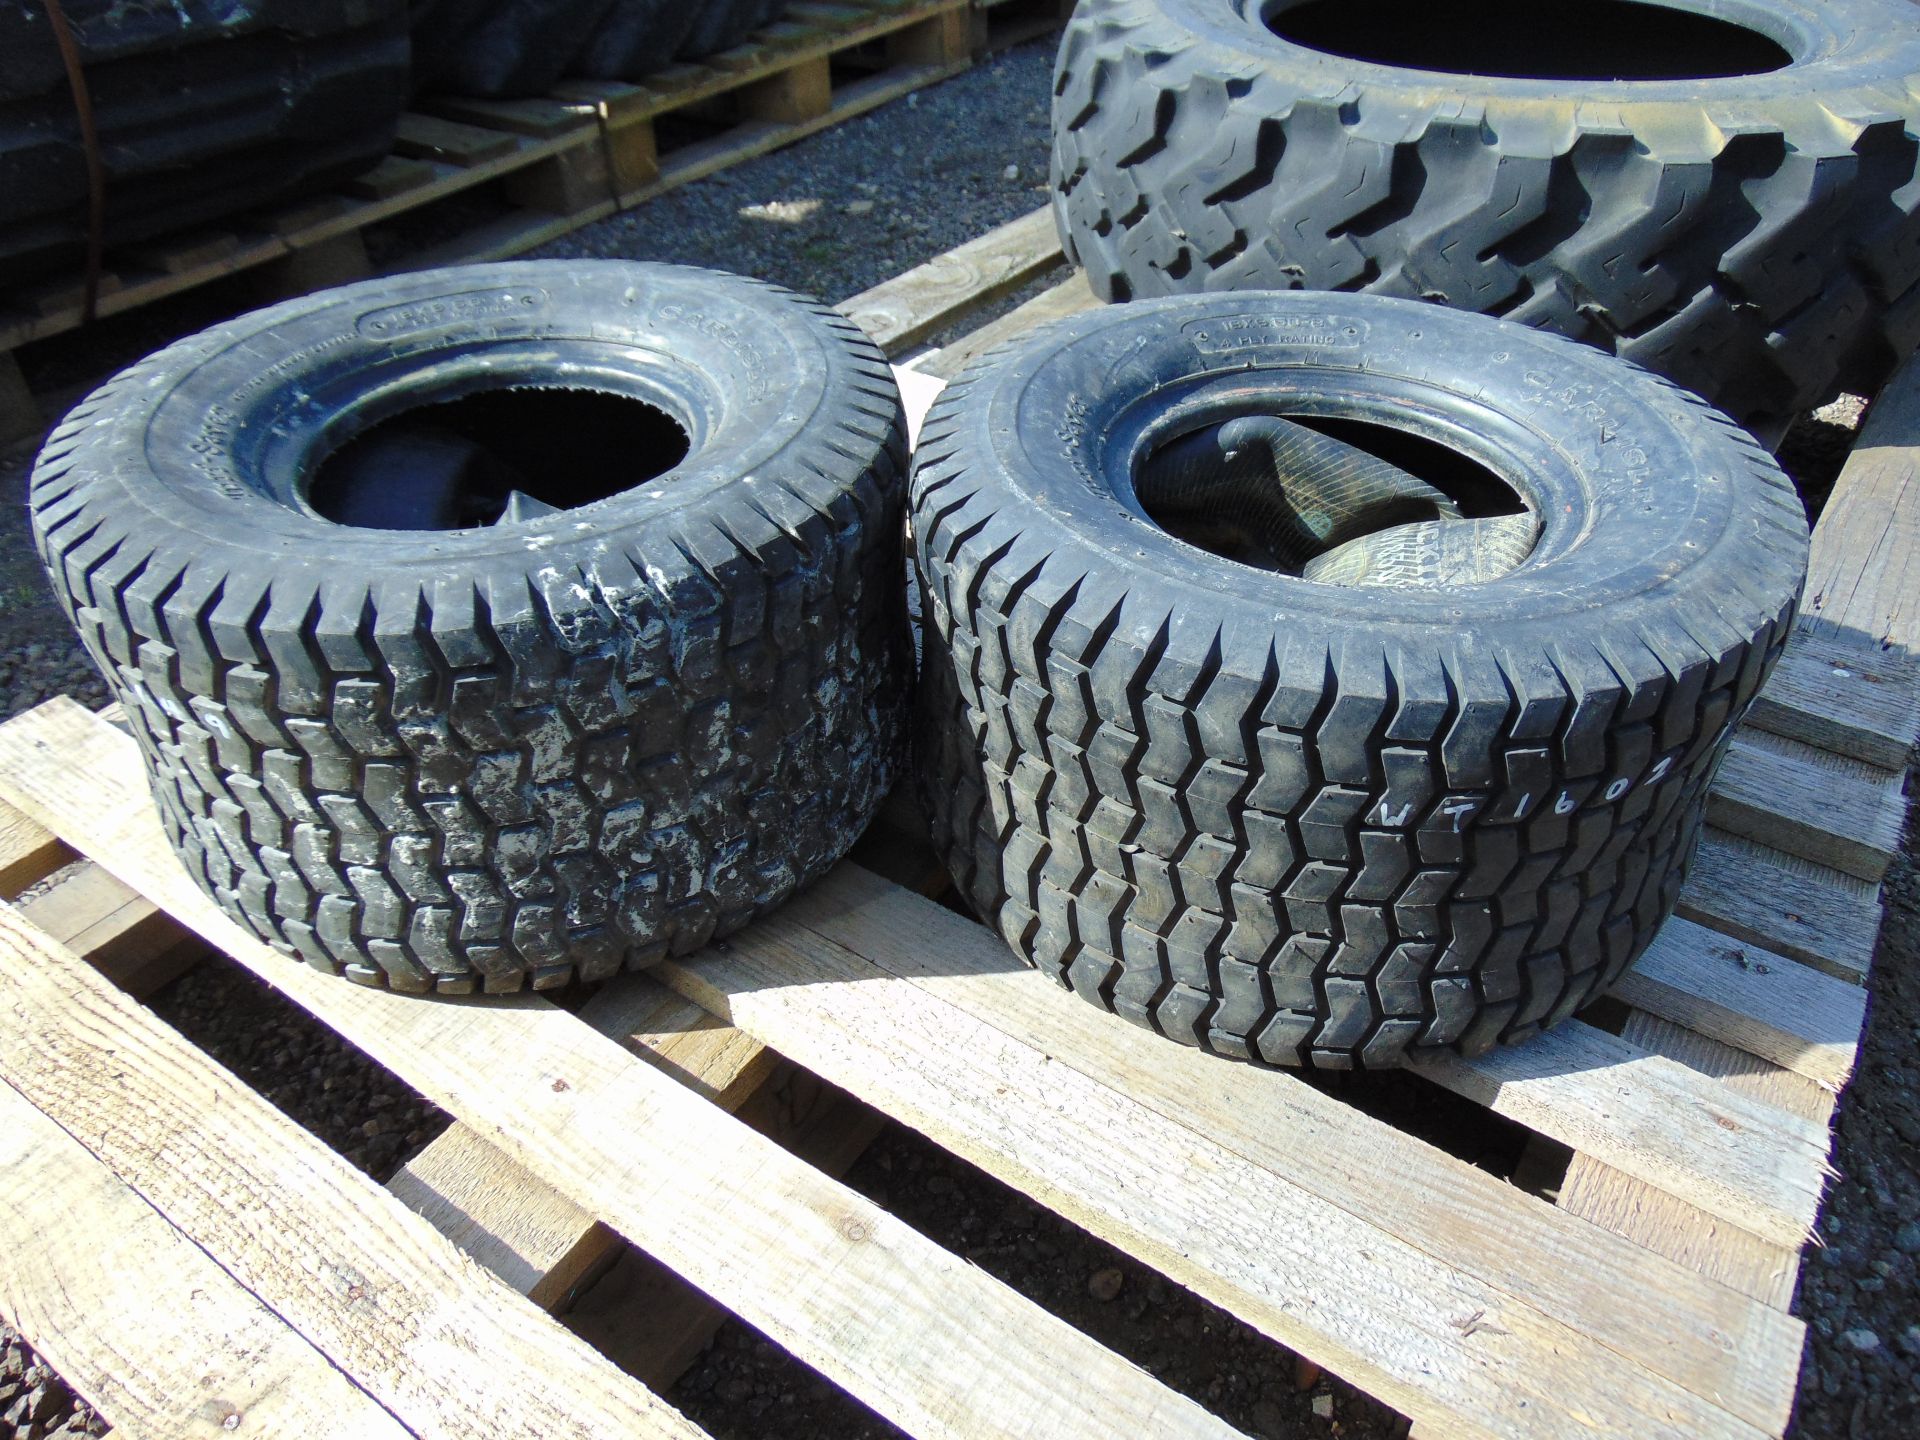 2 x Carlisle Turf-Saver 18x9.50-8 Tyres